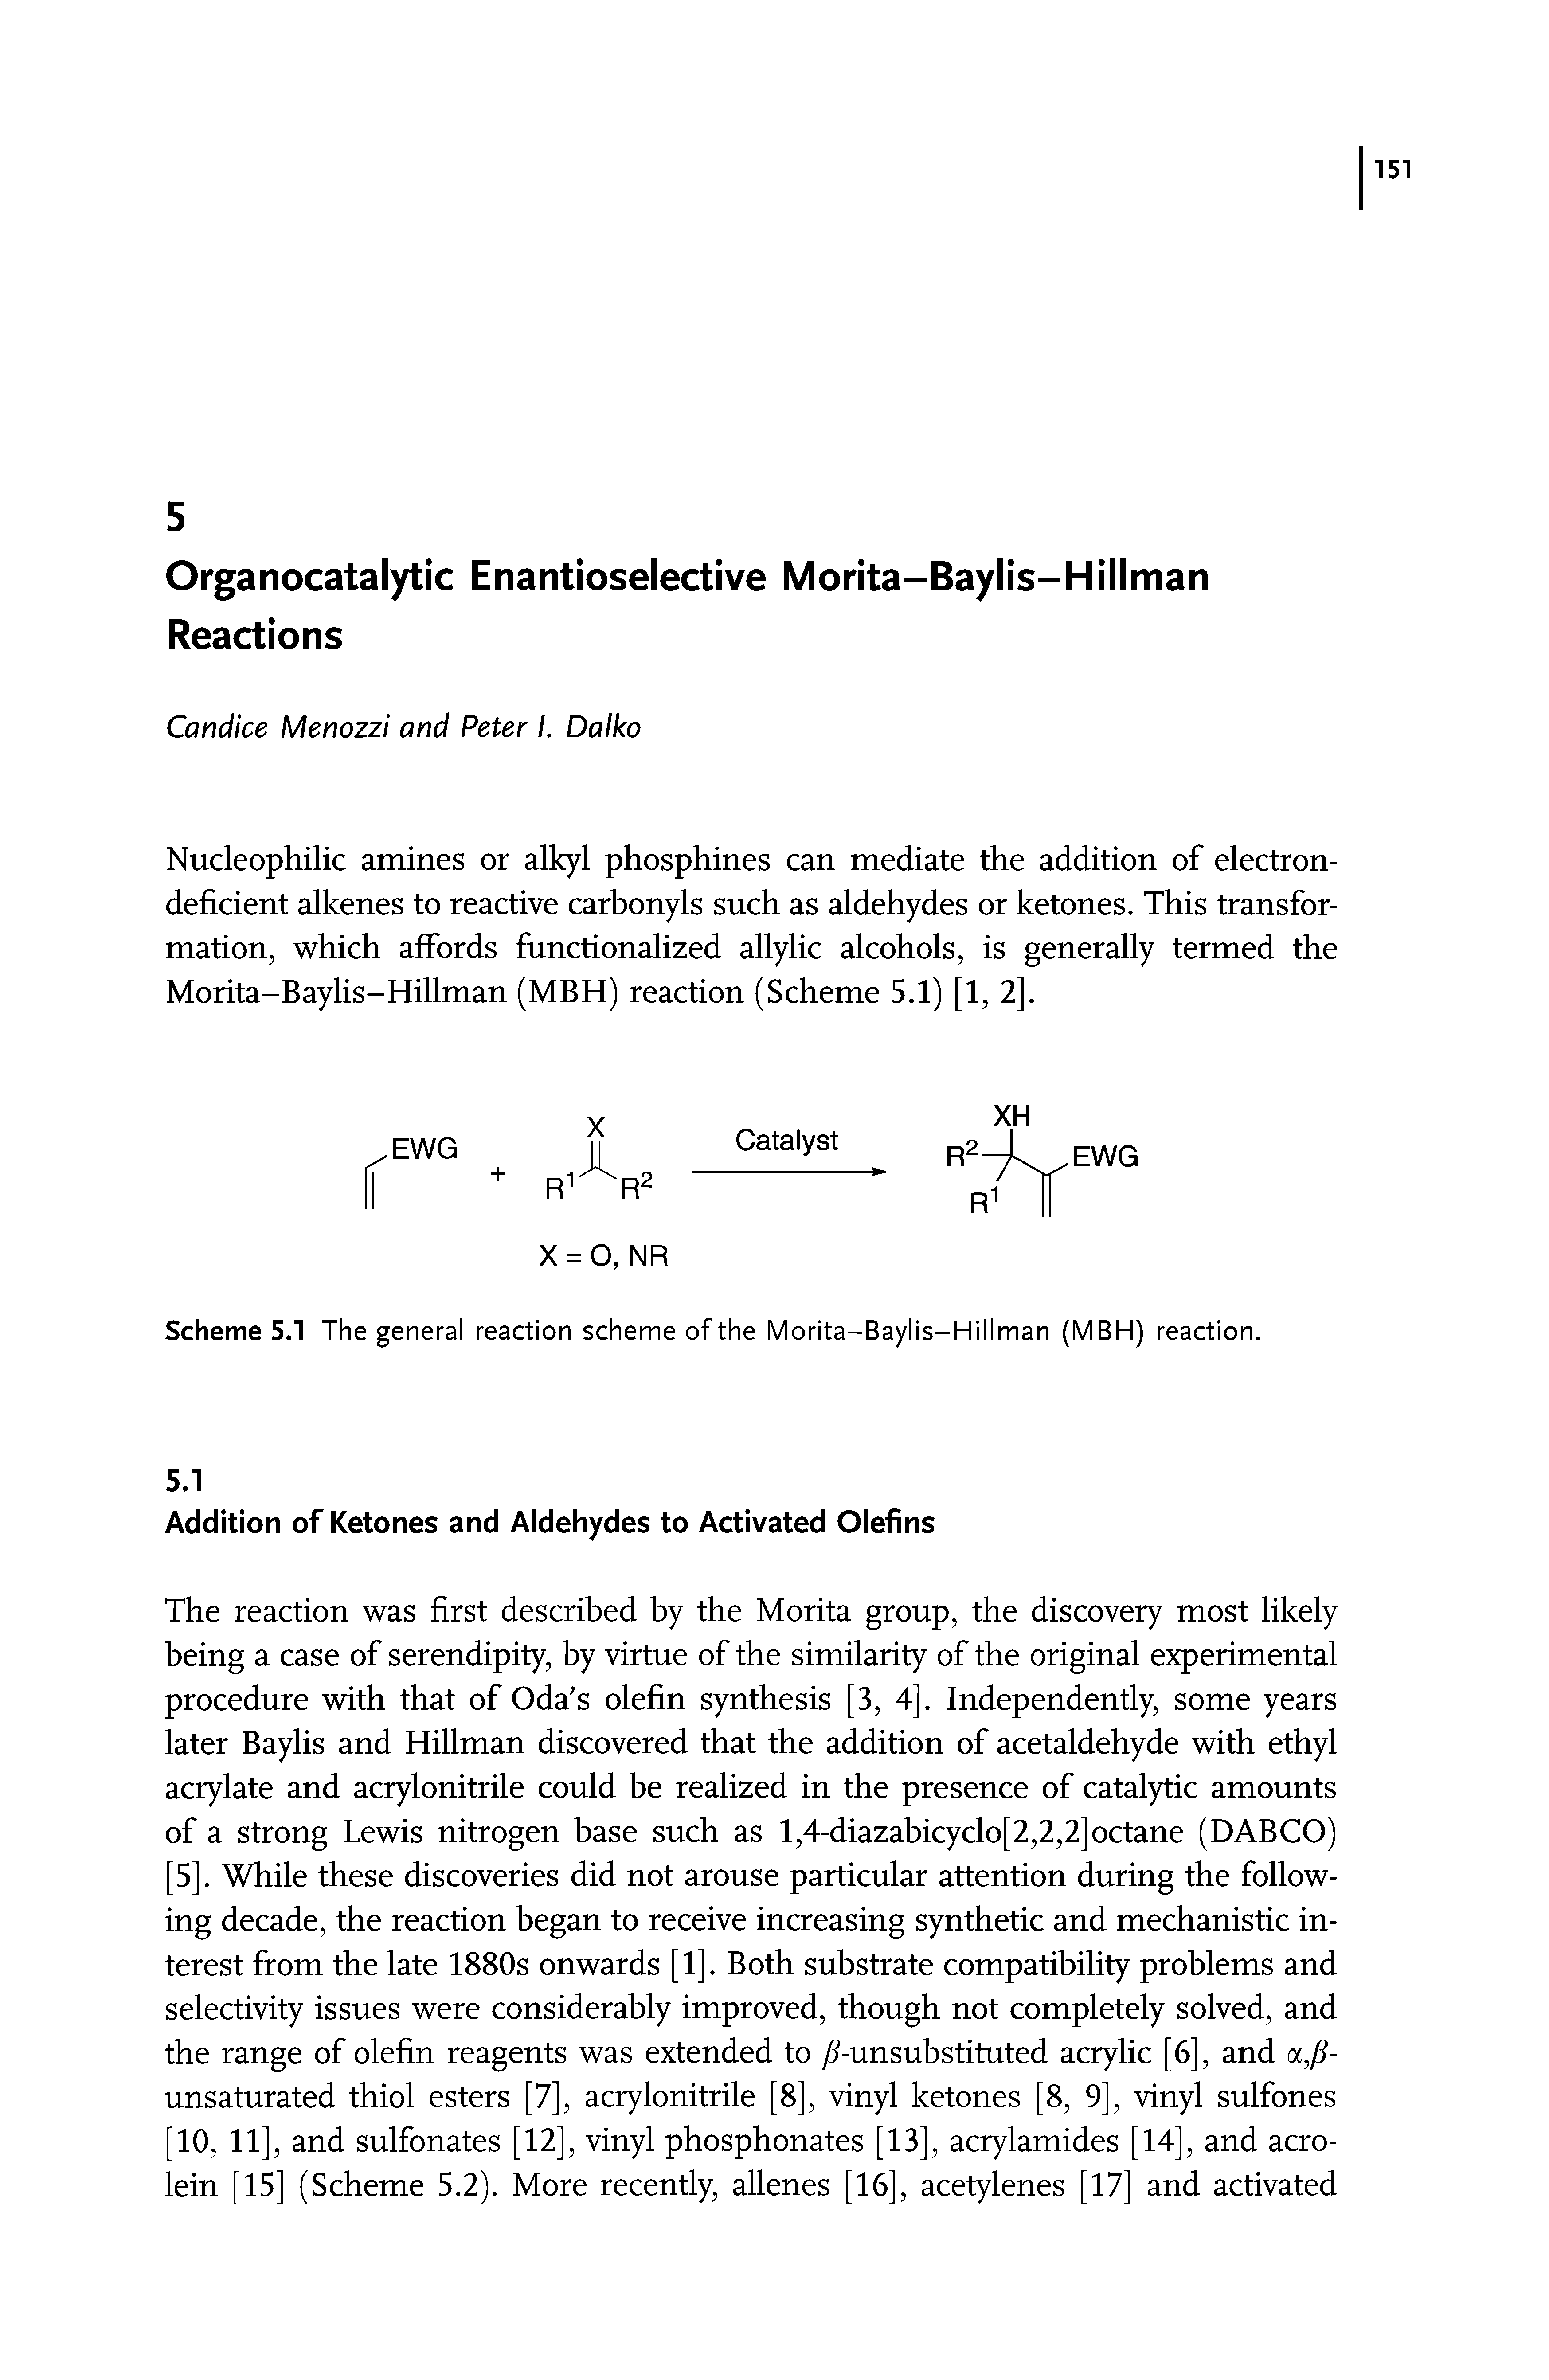 Scheme 5.1 The general reaction scheme of the Morita-Baylis-Hillman (MBH) reaction.